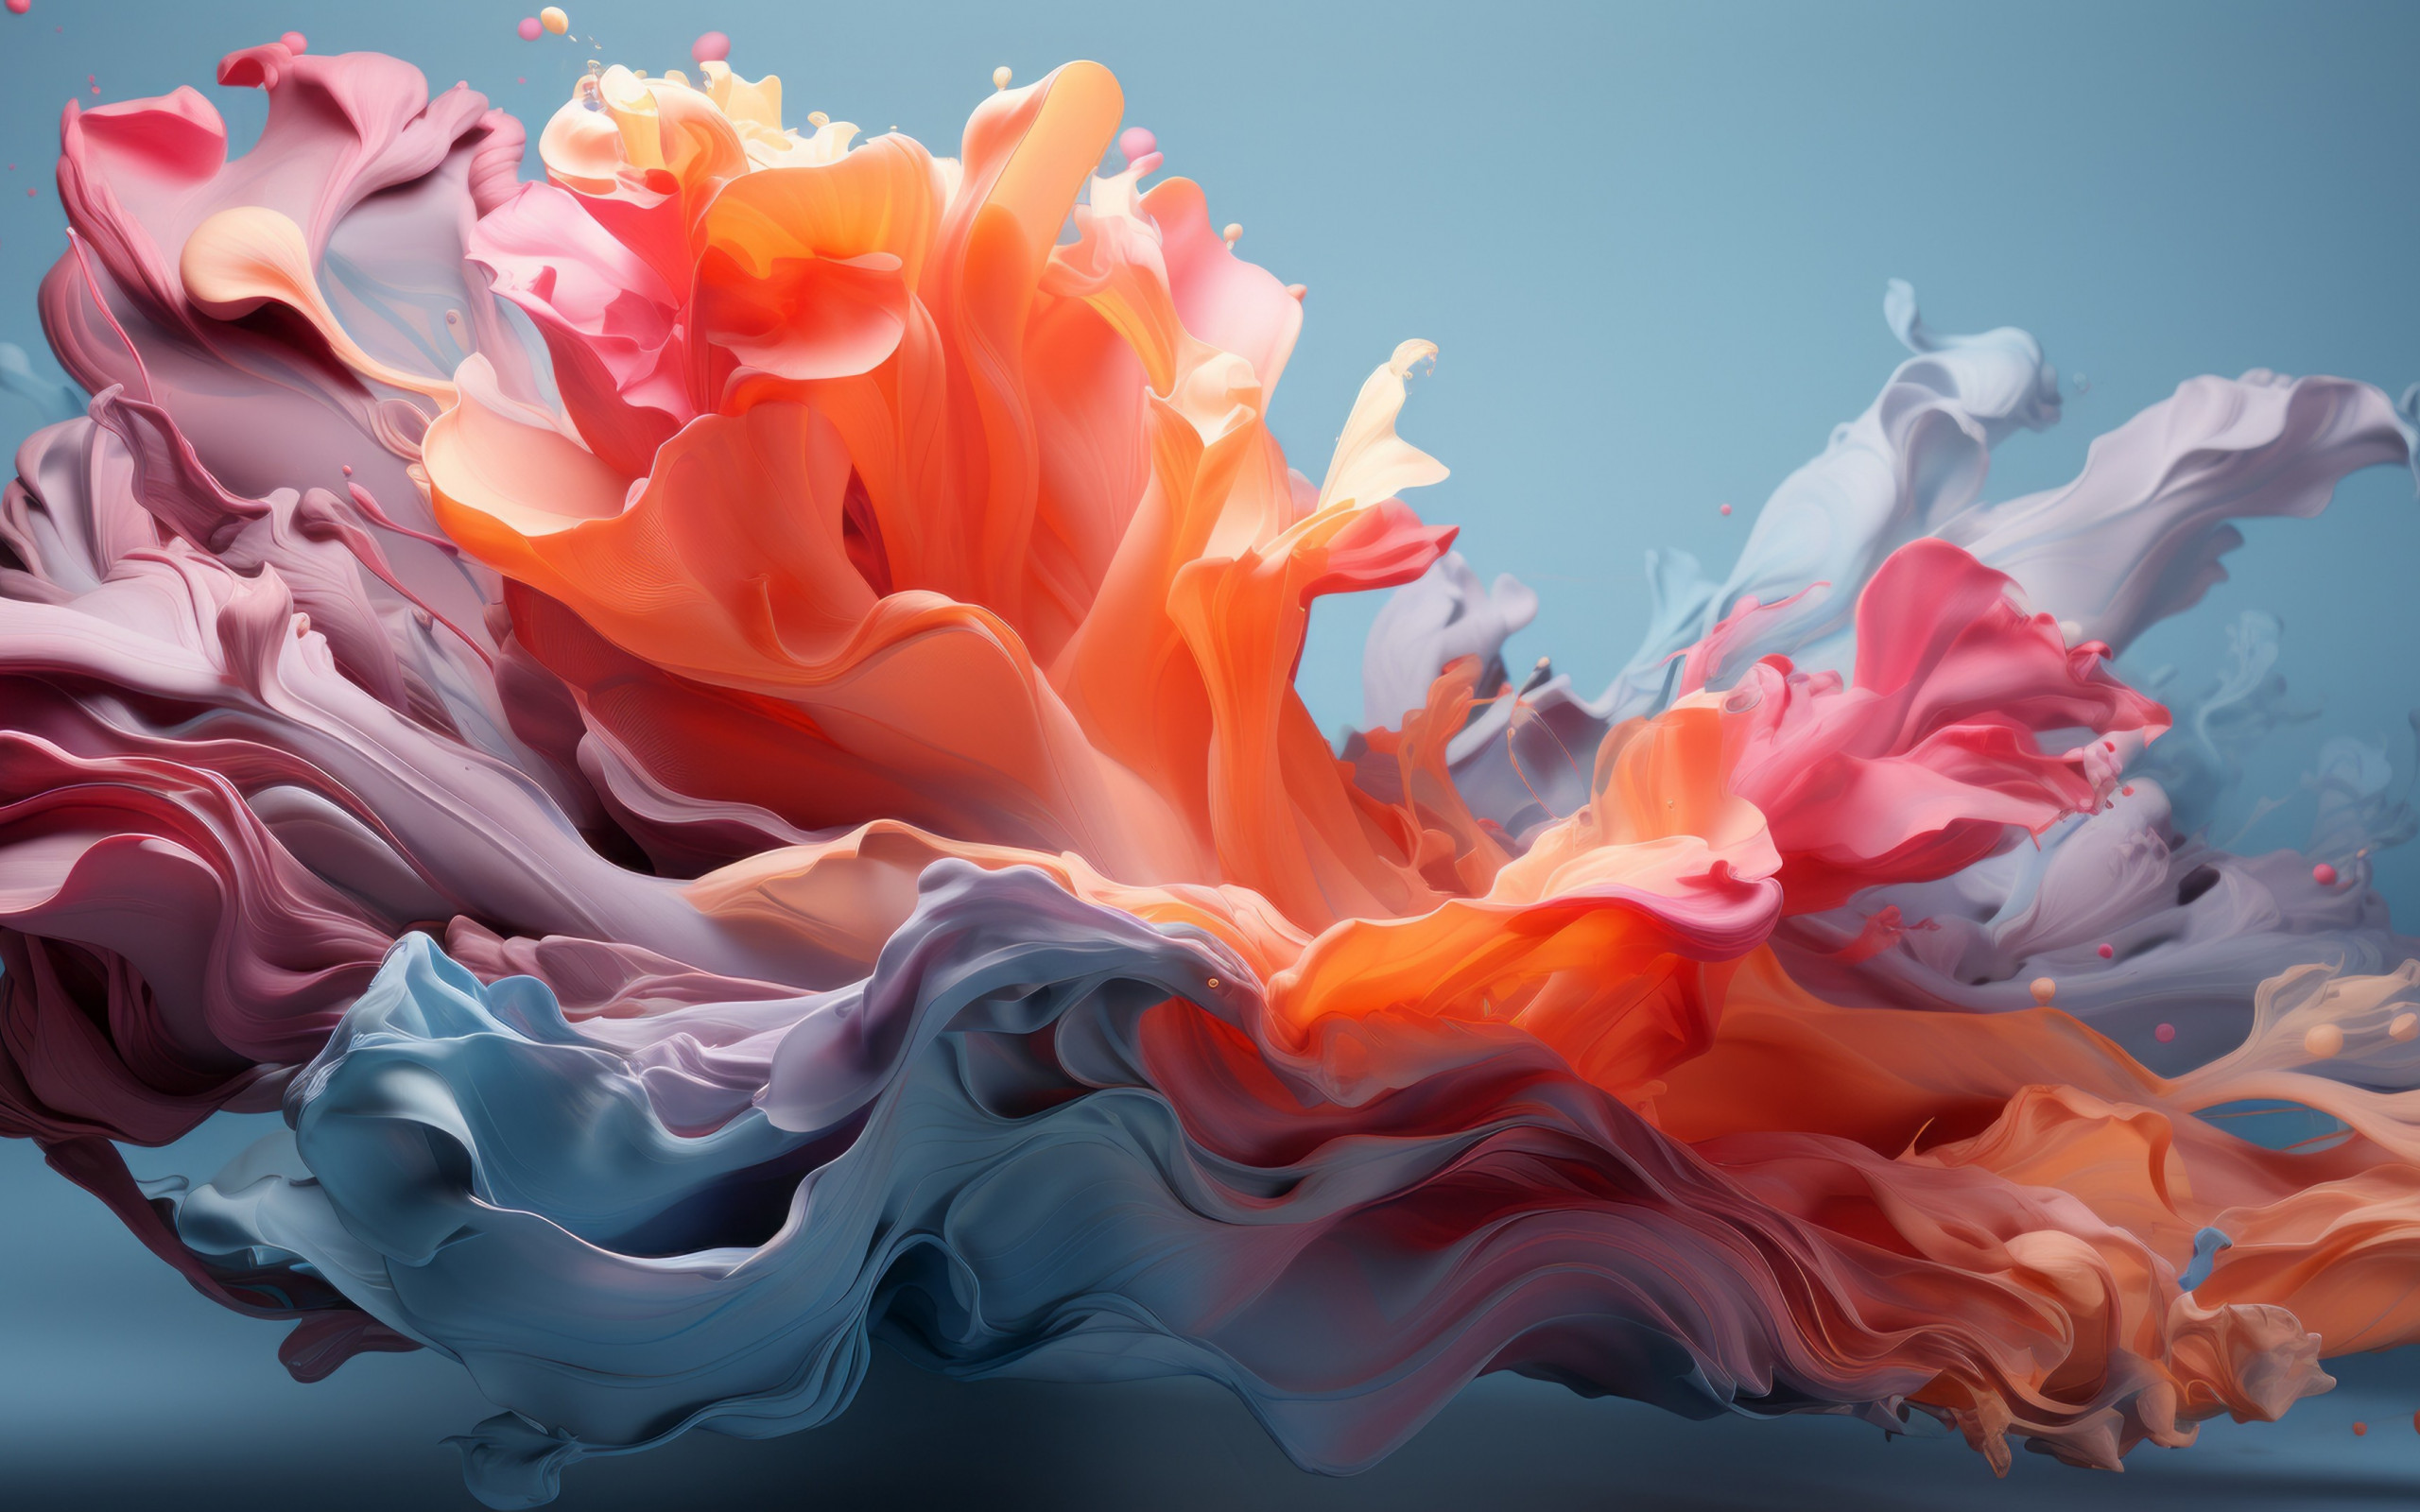 Super Abstract Digital Art wallpaper 2560x1600